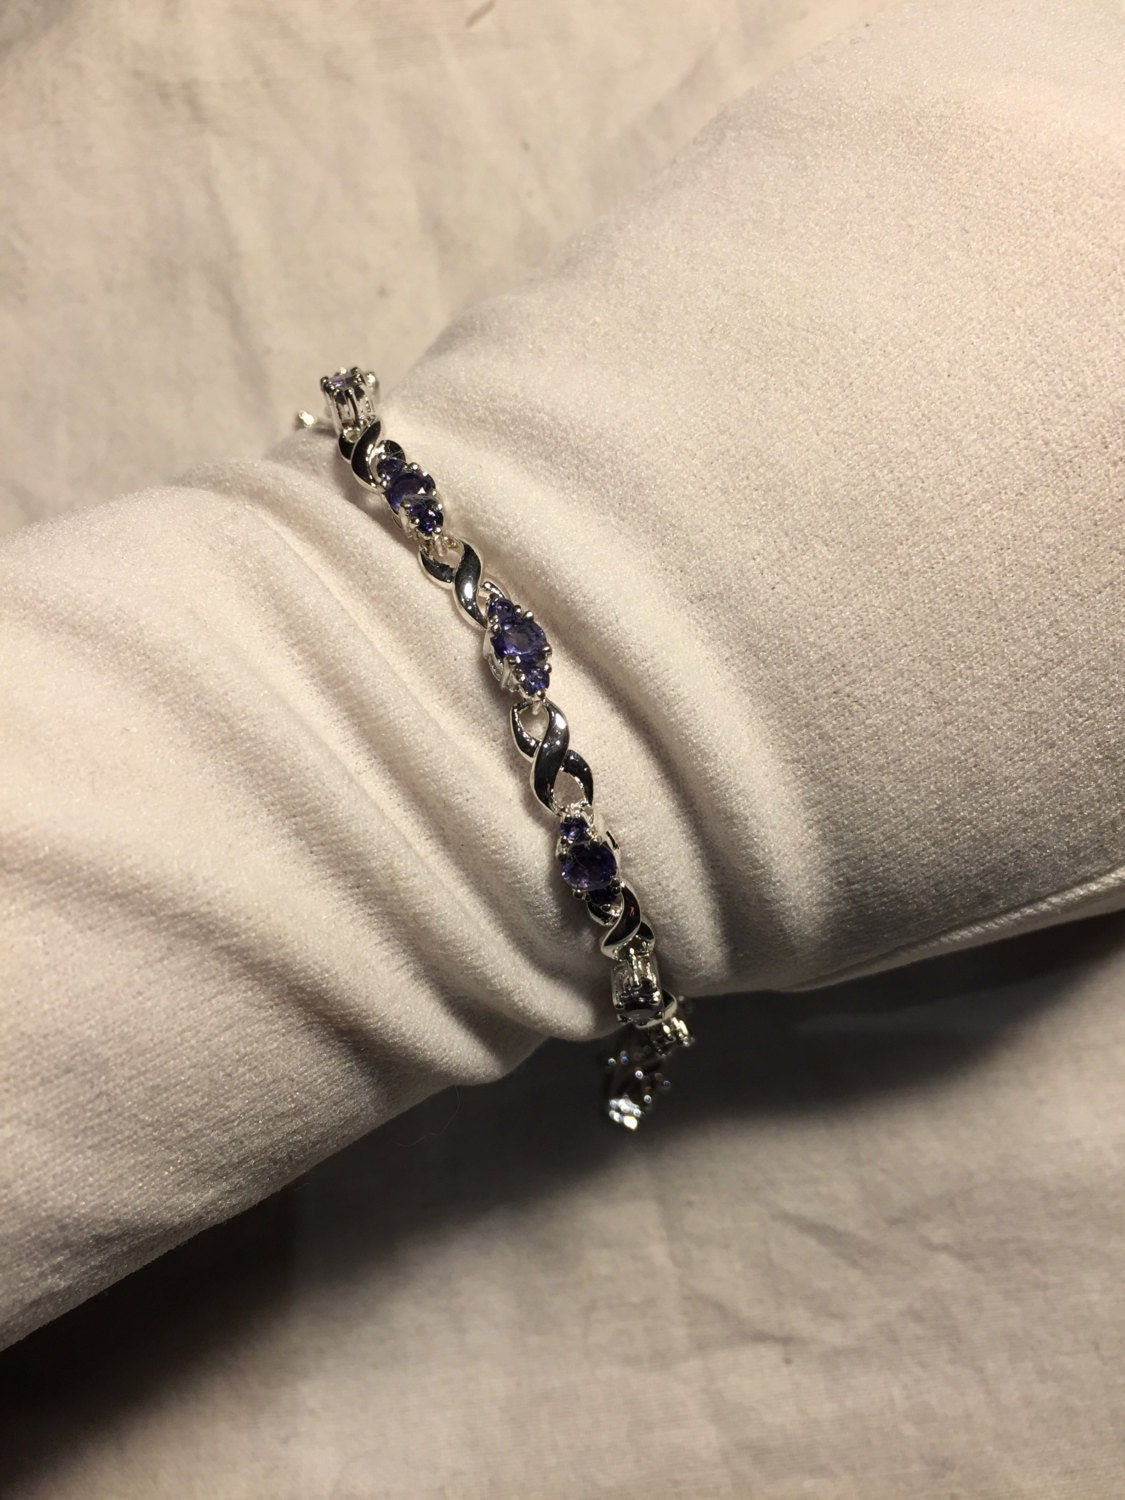 Handmade Genuine Blue Iolite 925 Sterling Silver Tennis Bracelet